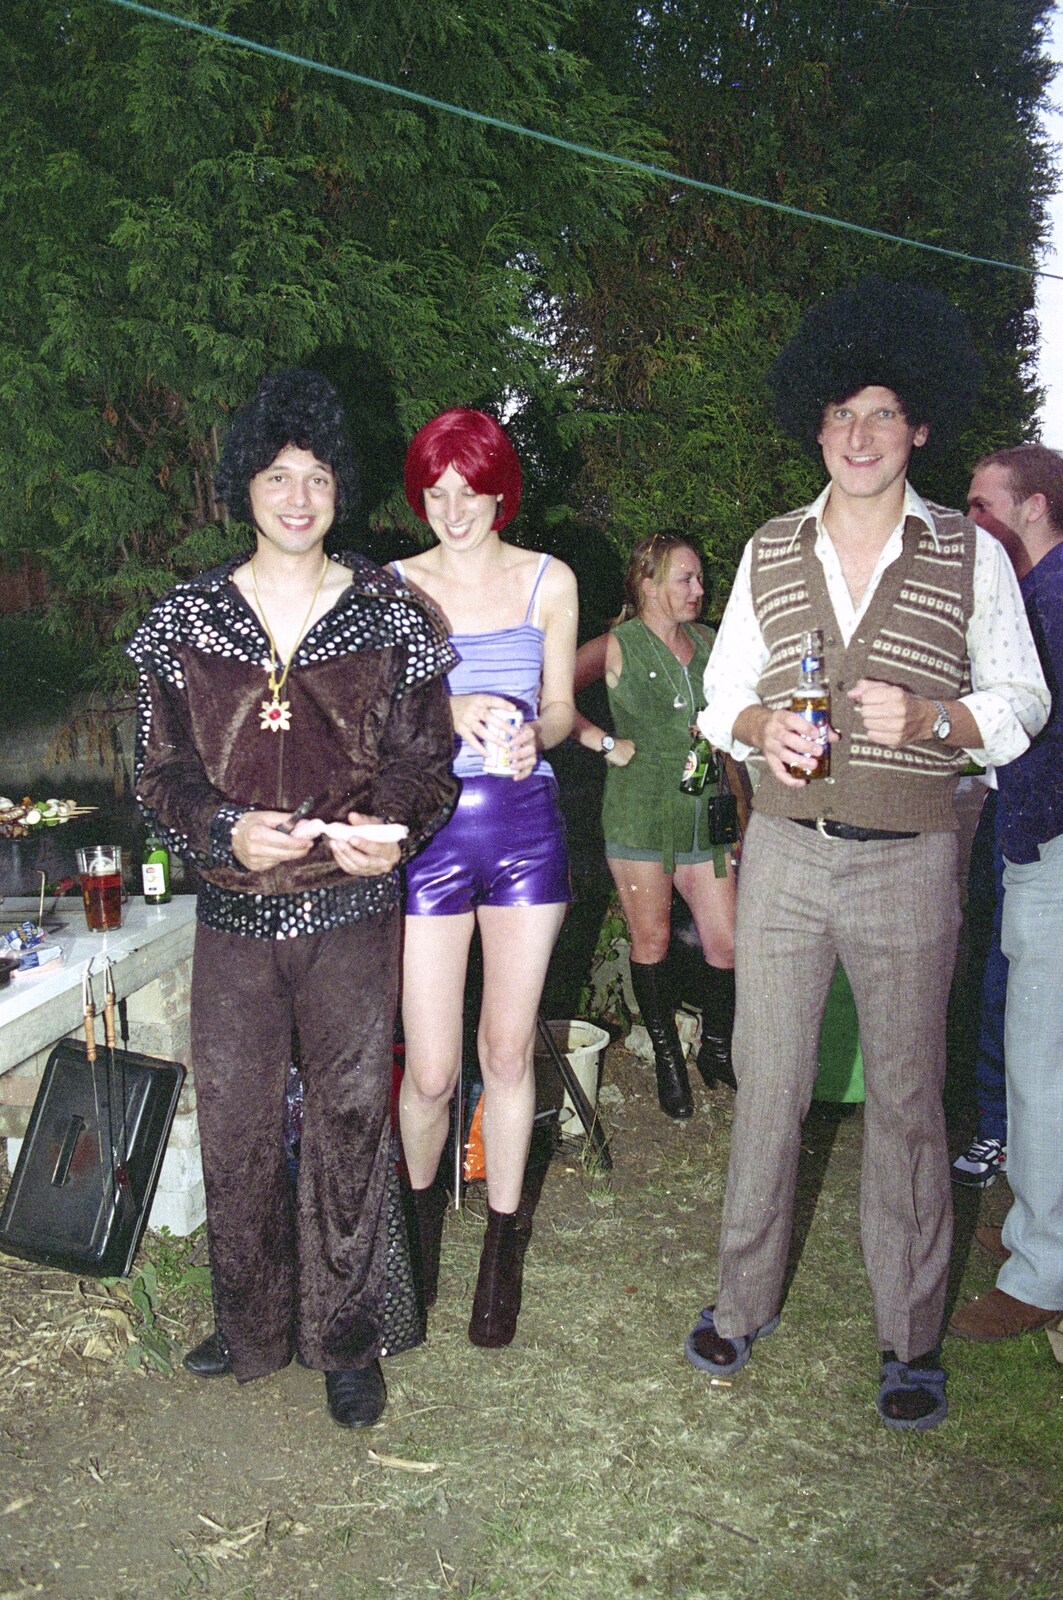 Jon Segger, right, in a tank top from "Dave's" CISU Fancy Dress Party, Finbar's Walk, Ipswich - 15th September 1999